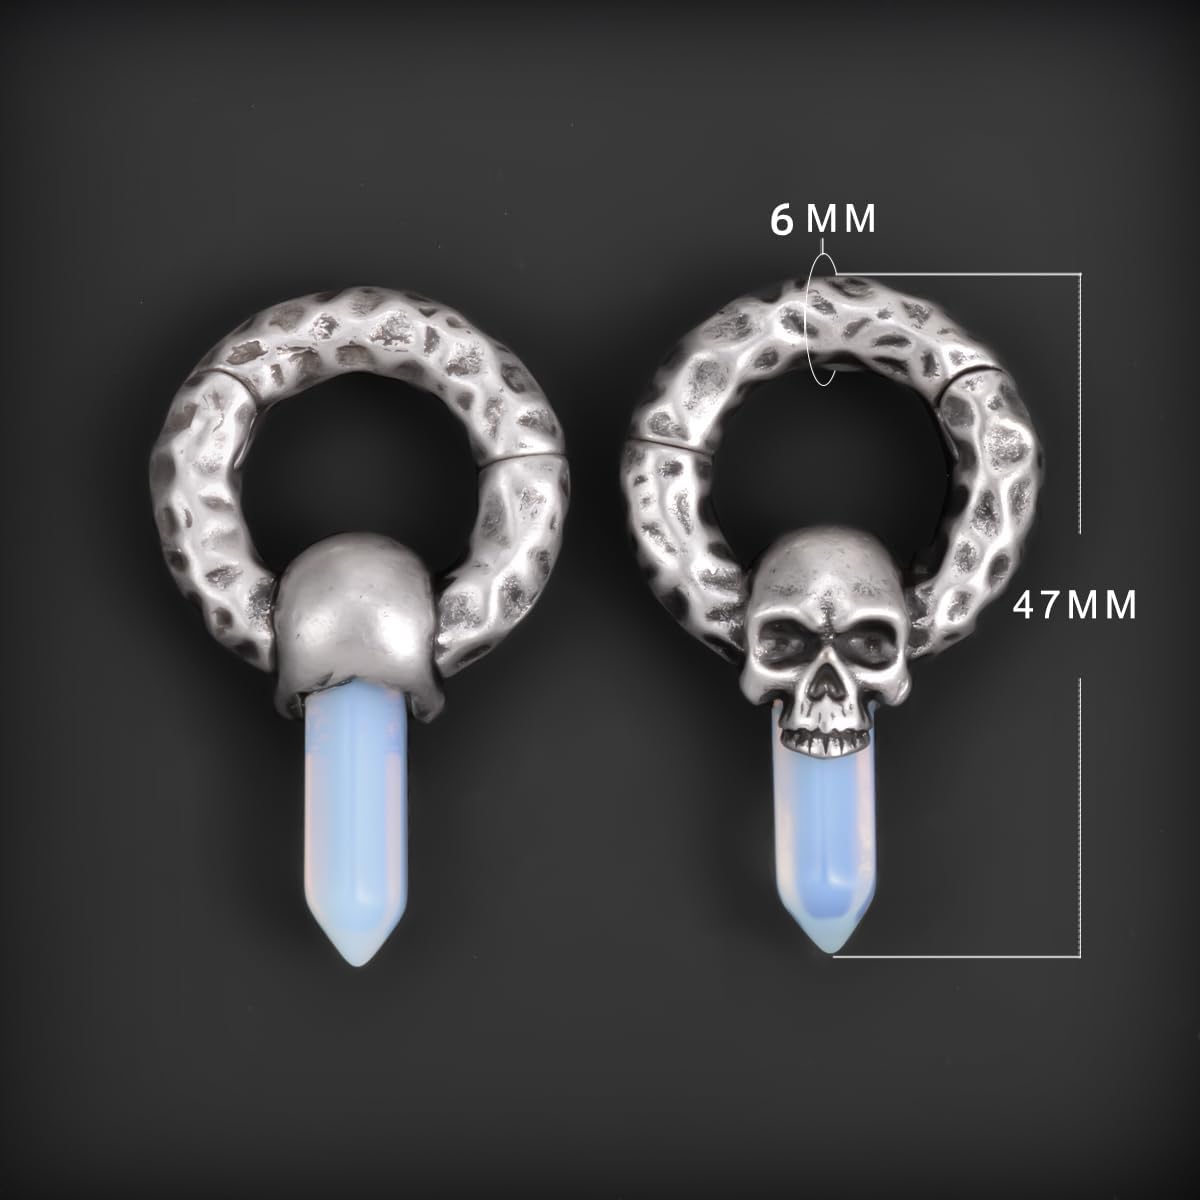 1 Pair 2g Ear Weights For Stretched Ears Heavy 6mm Ear Gauge Plug Tunnels Expander Piercing Earrings Dangle Gauge Hanger Earrings Jewelry